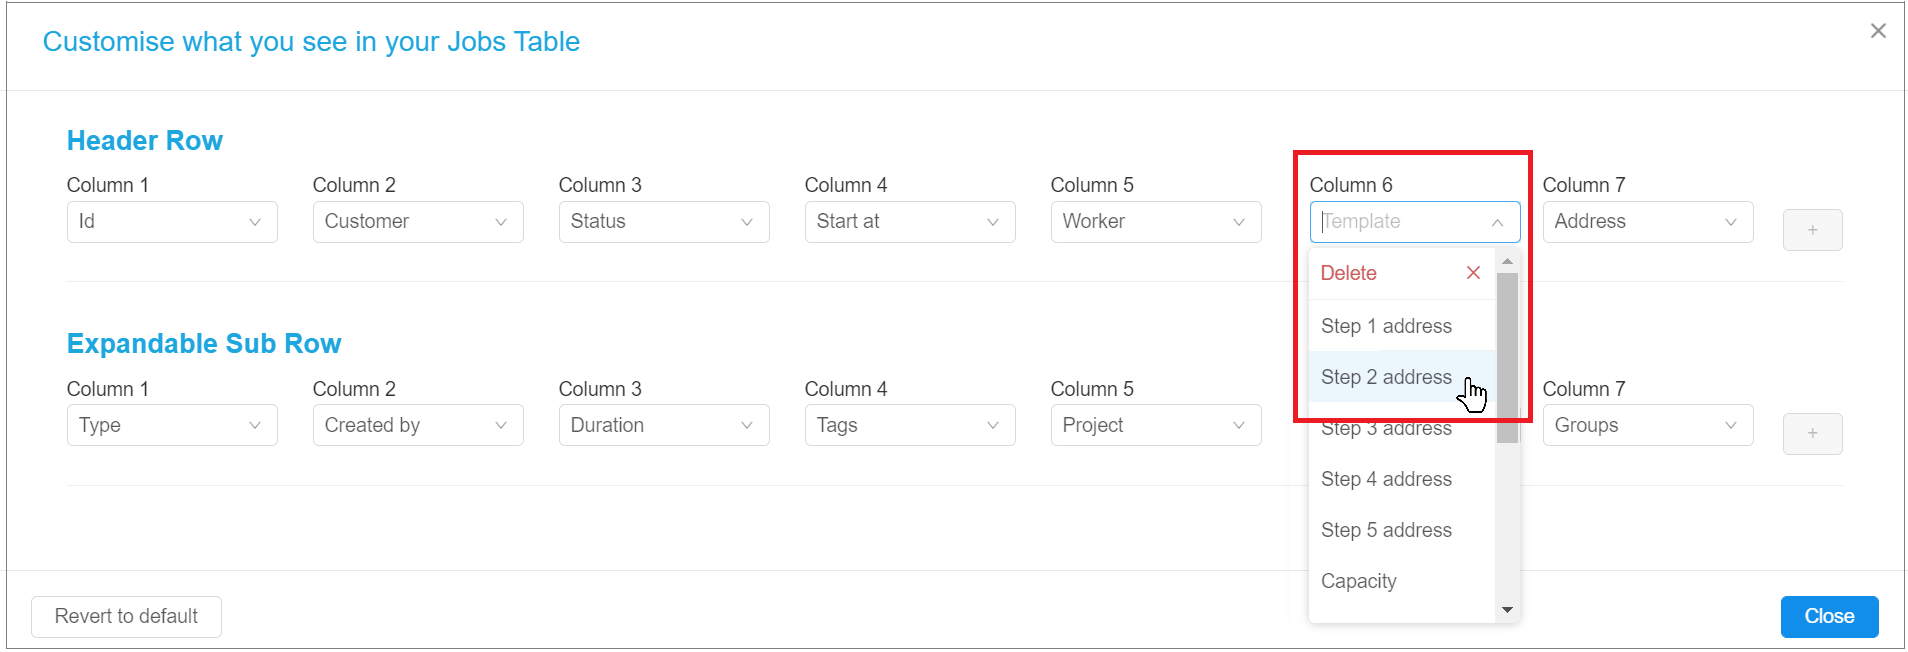 Job_List_customise_columns_add_a_step_address_instead_of_template.png